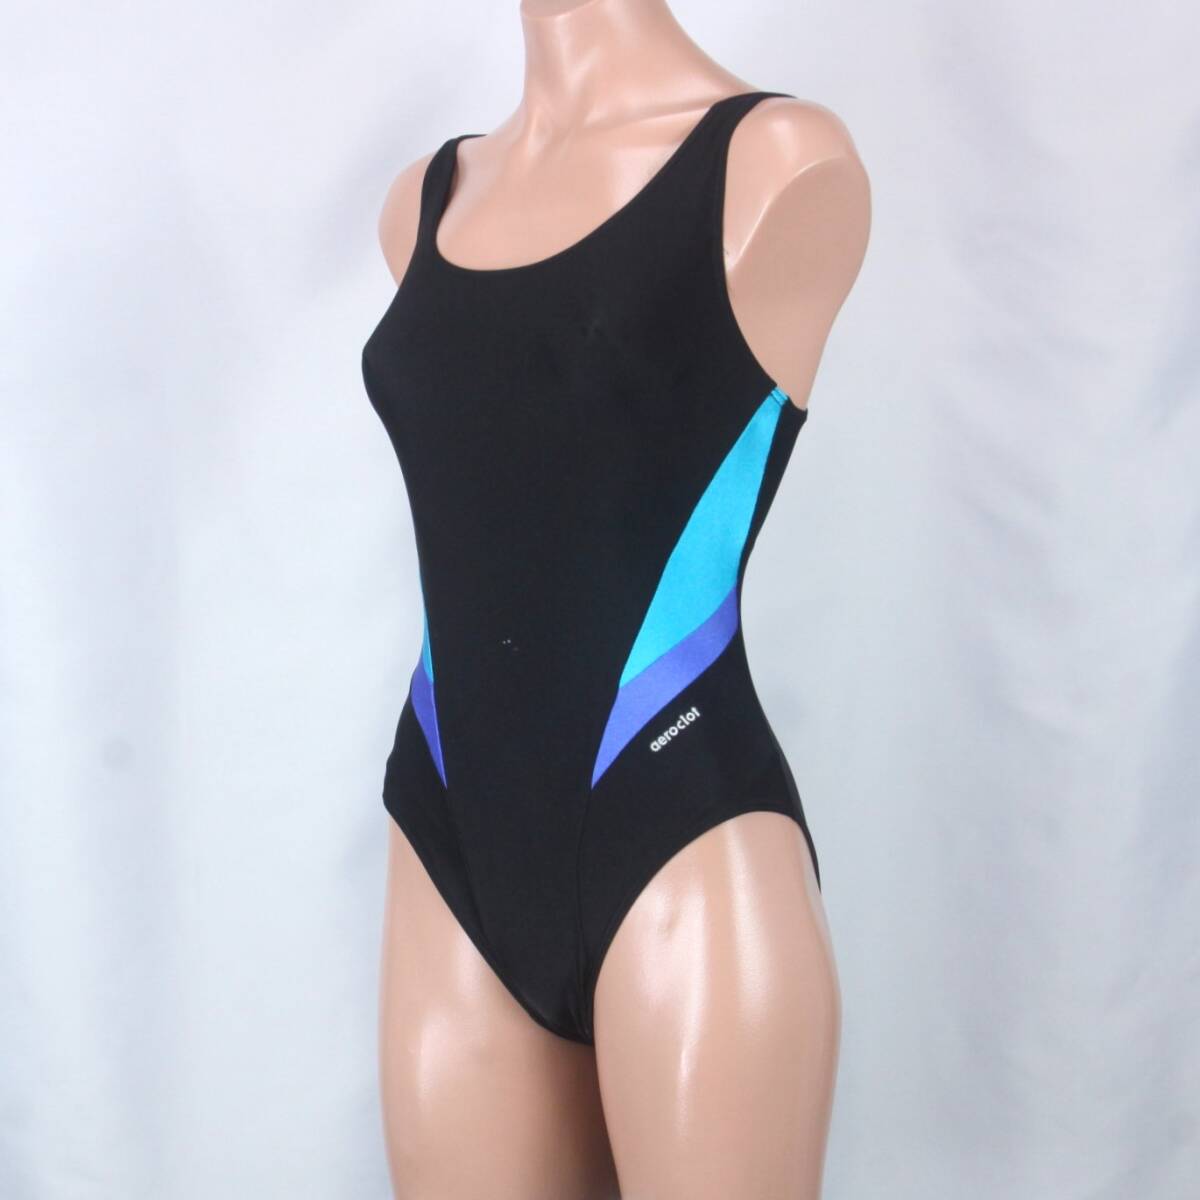 U8350★aeroclot 水着 レディース LLサイズ ワンピース ジャパーナ ブラック 黒 水色 水泳 競泳 女子 スイム スイミング プール ビーチの画像1